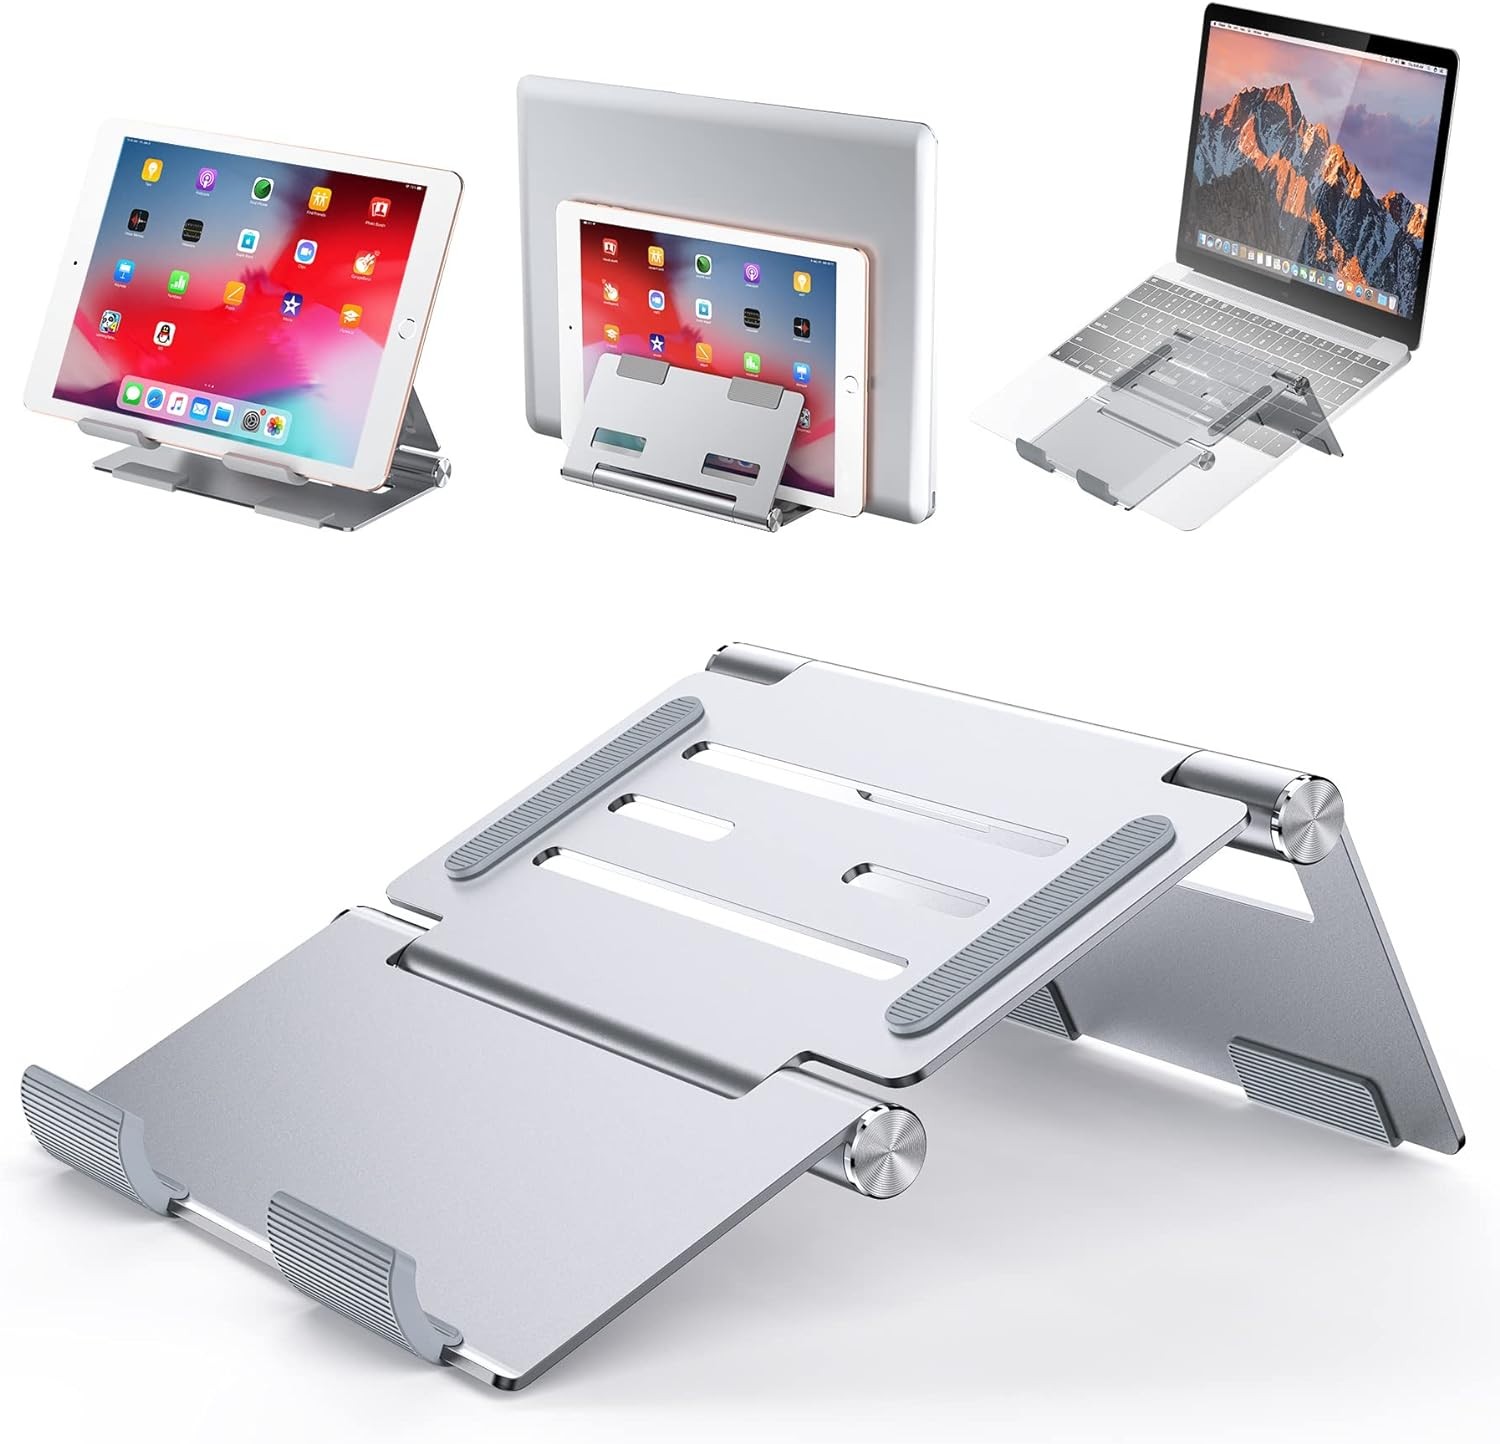 Youjia 3 in 1 ergonomic laptop stand